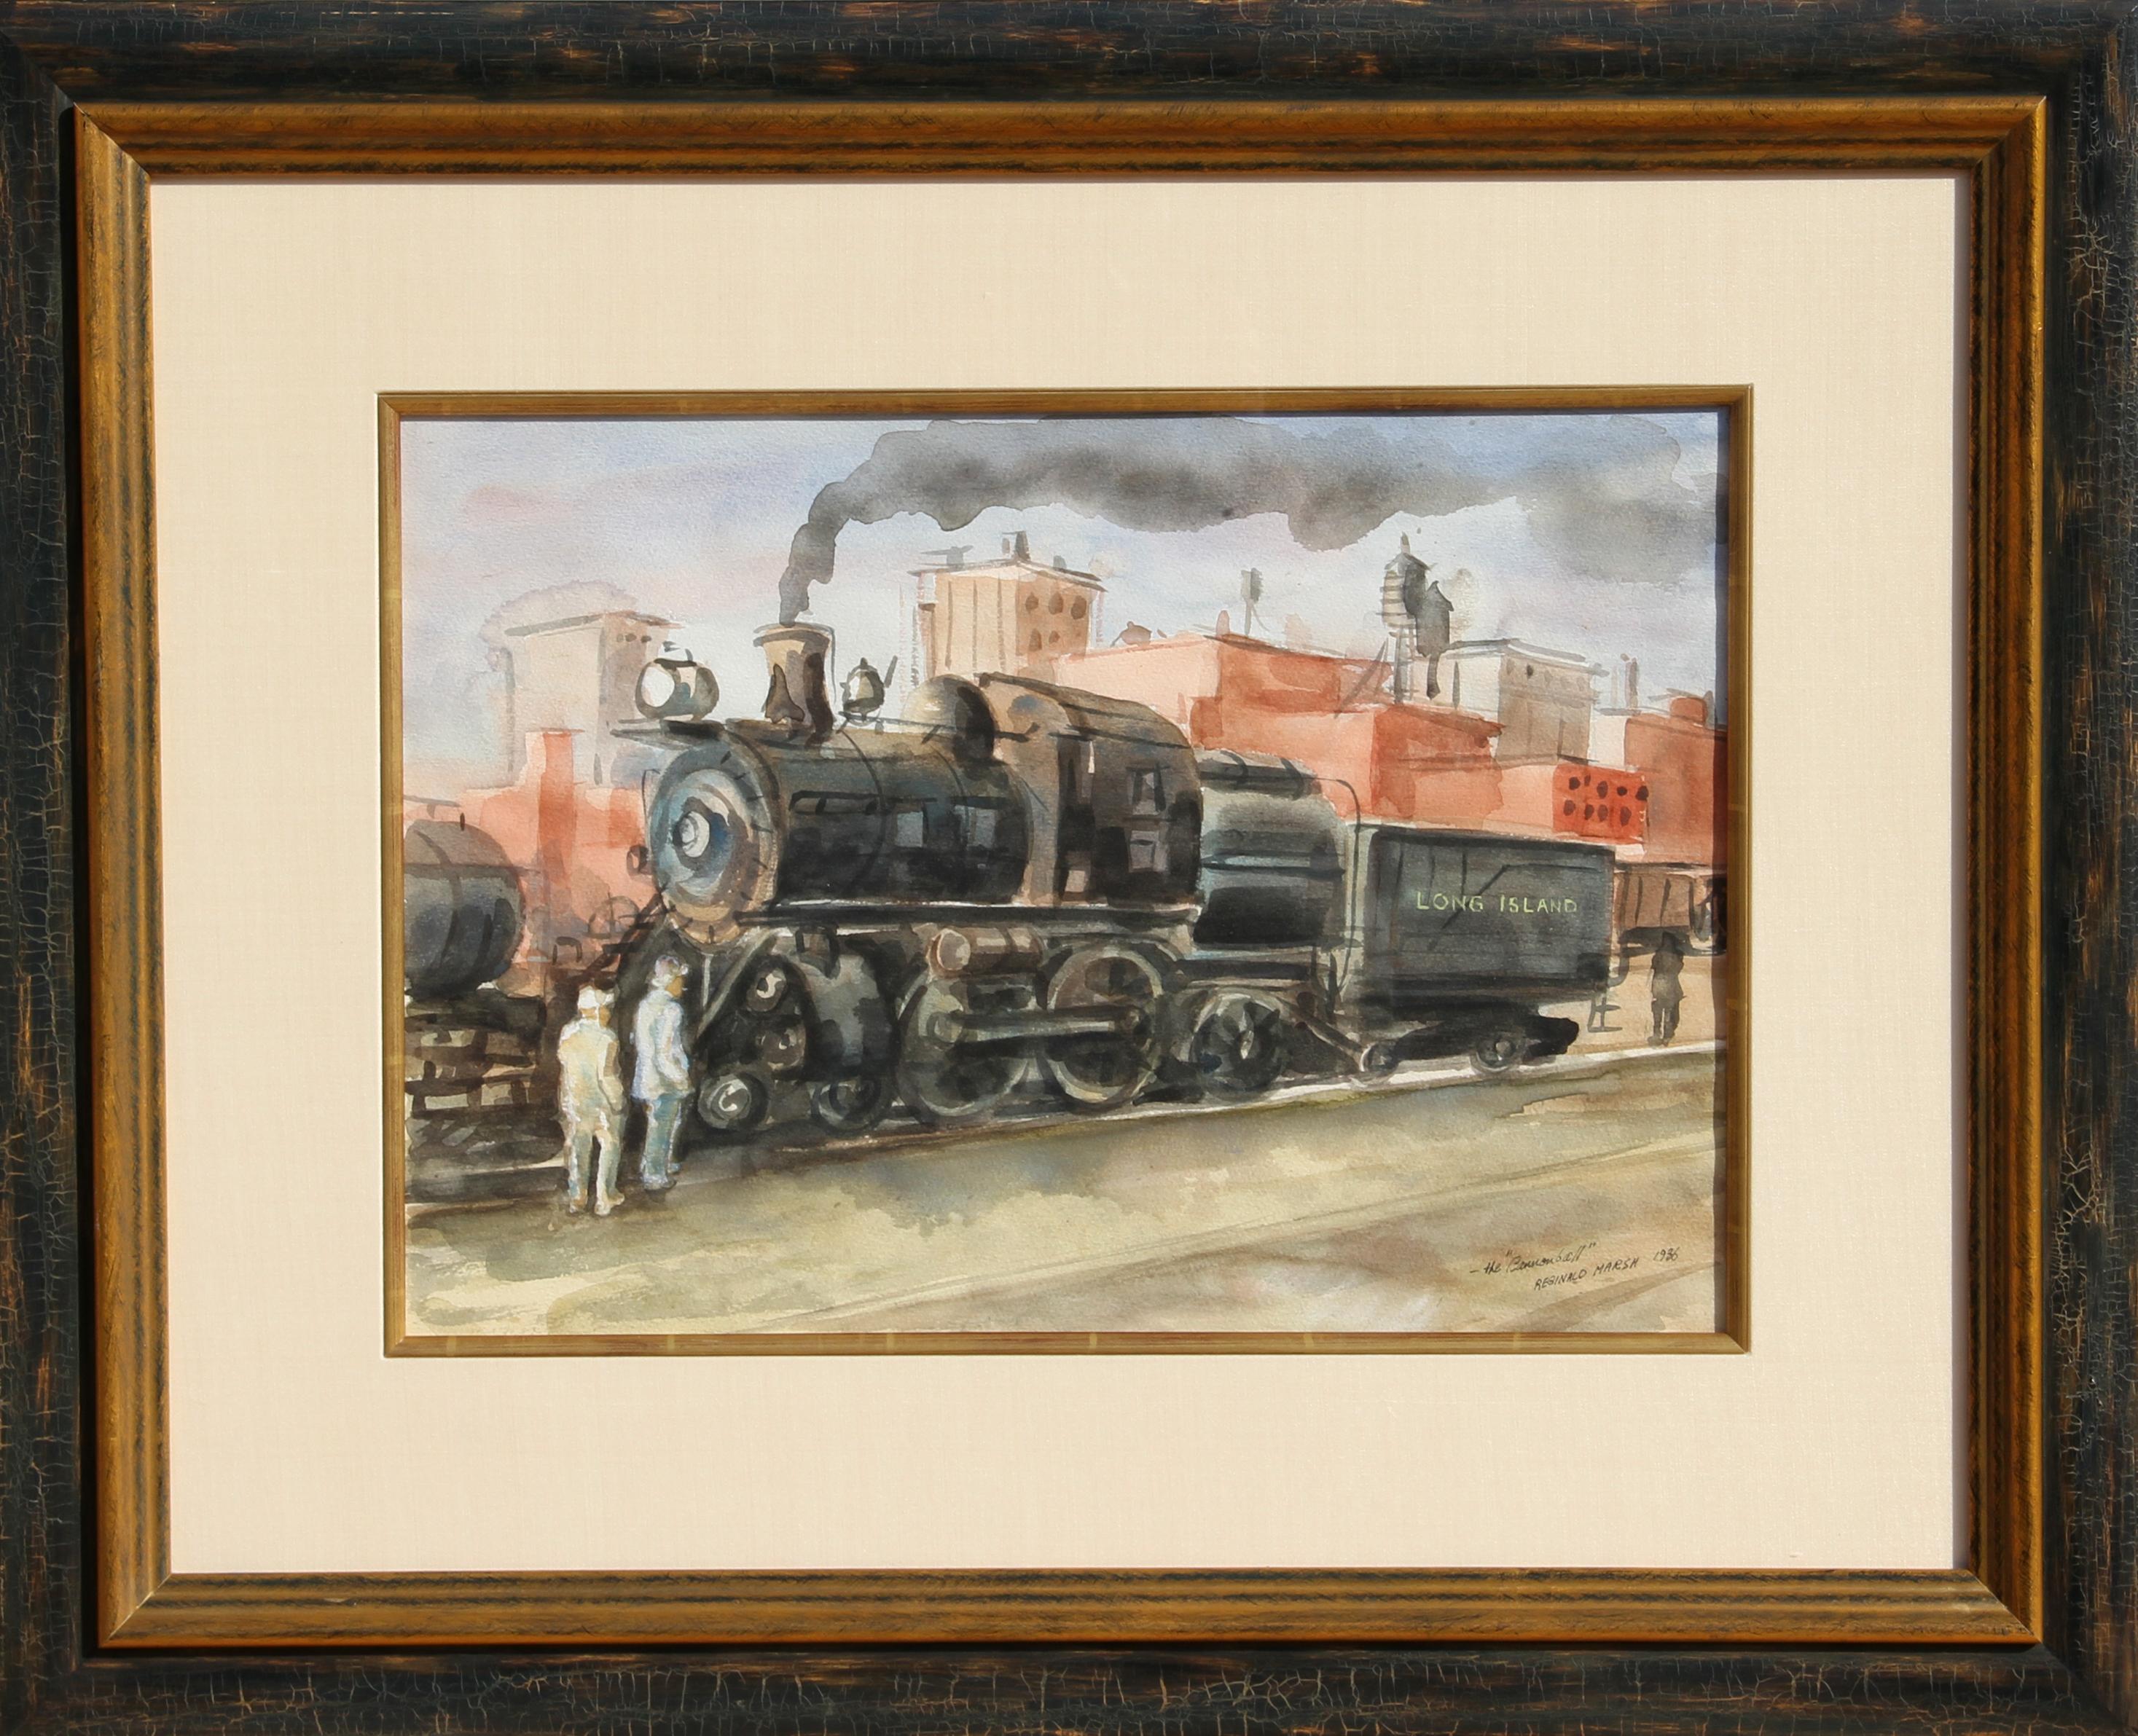 The "Cannonball", Locomotive Watercolor by Reginald Marsh